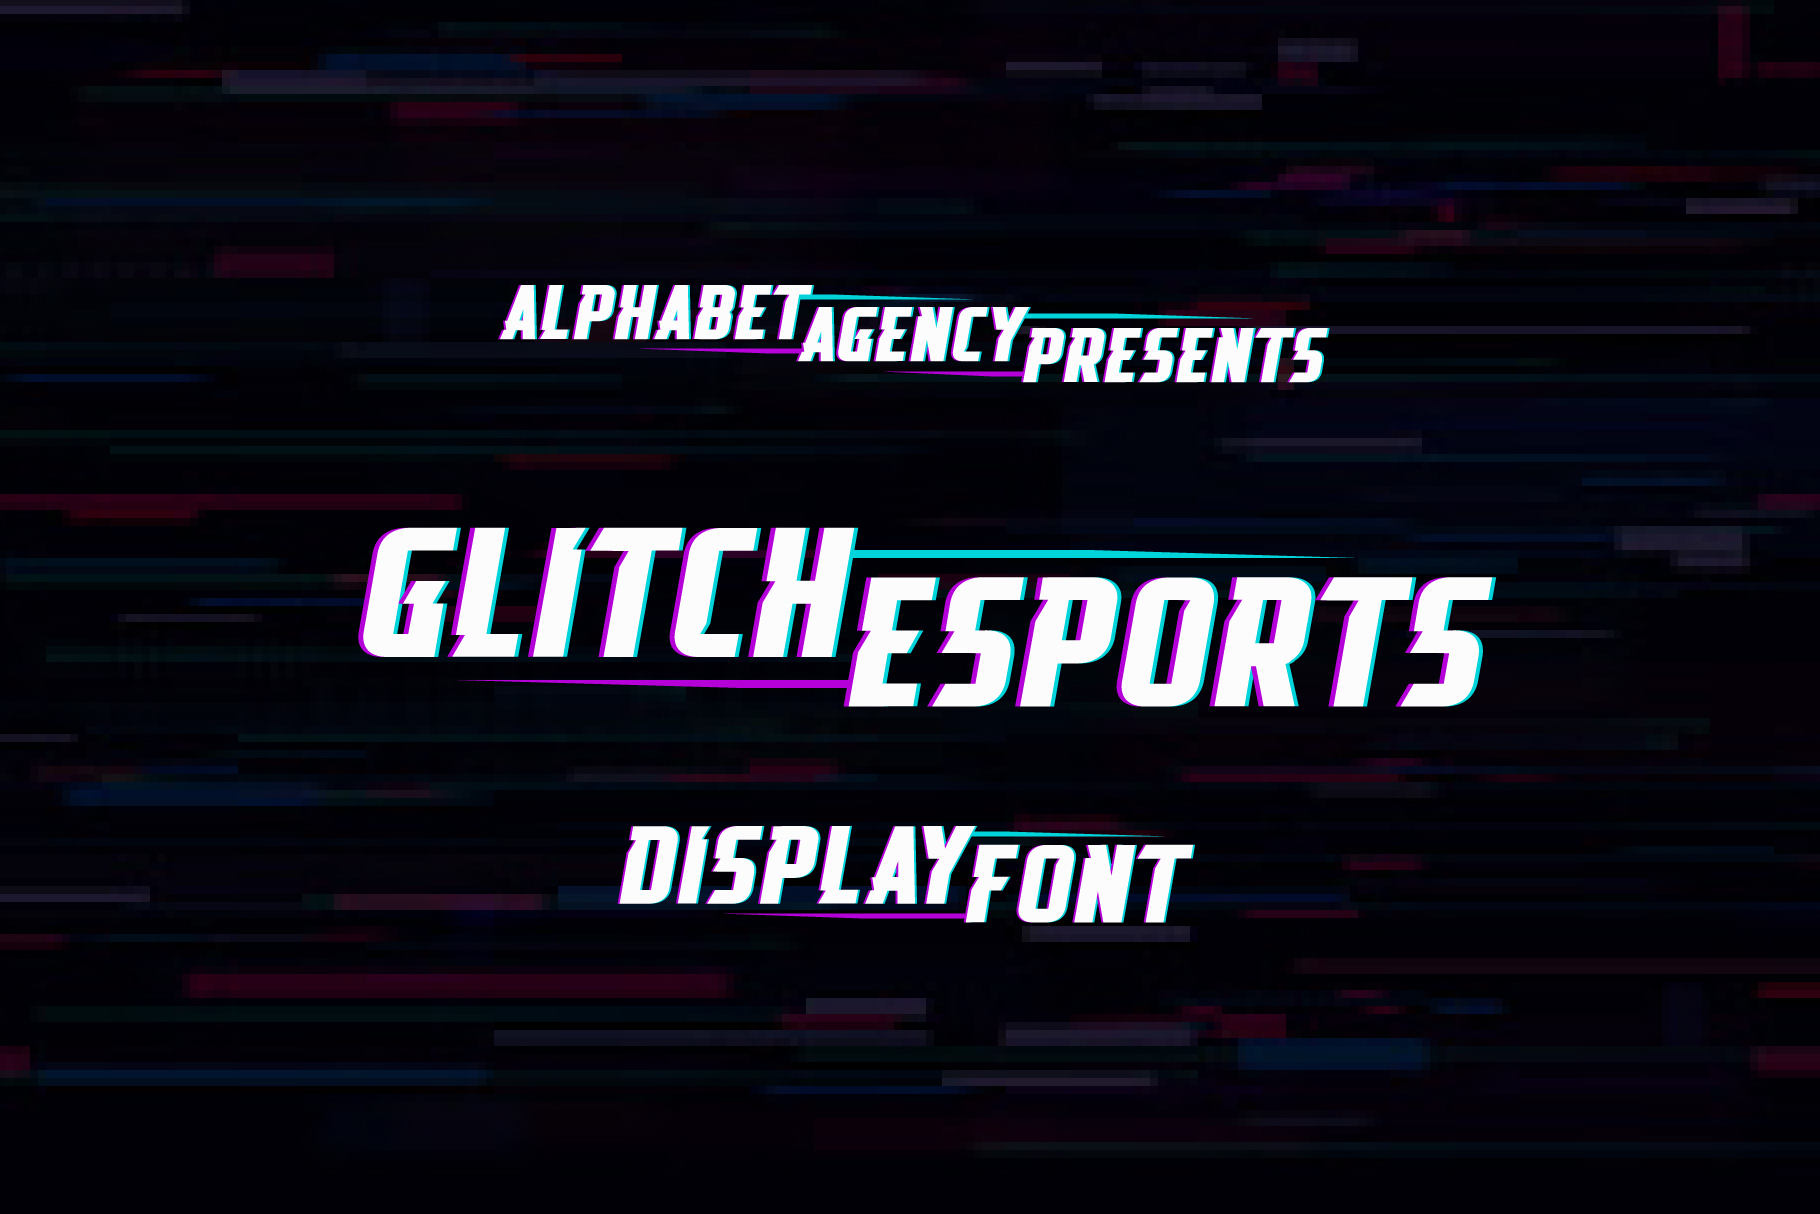 Glitch Esports